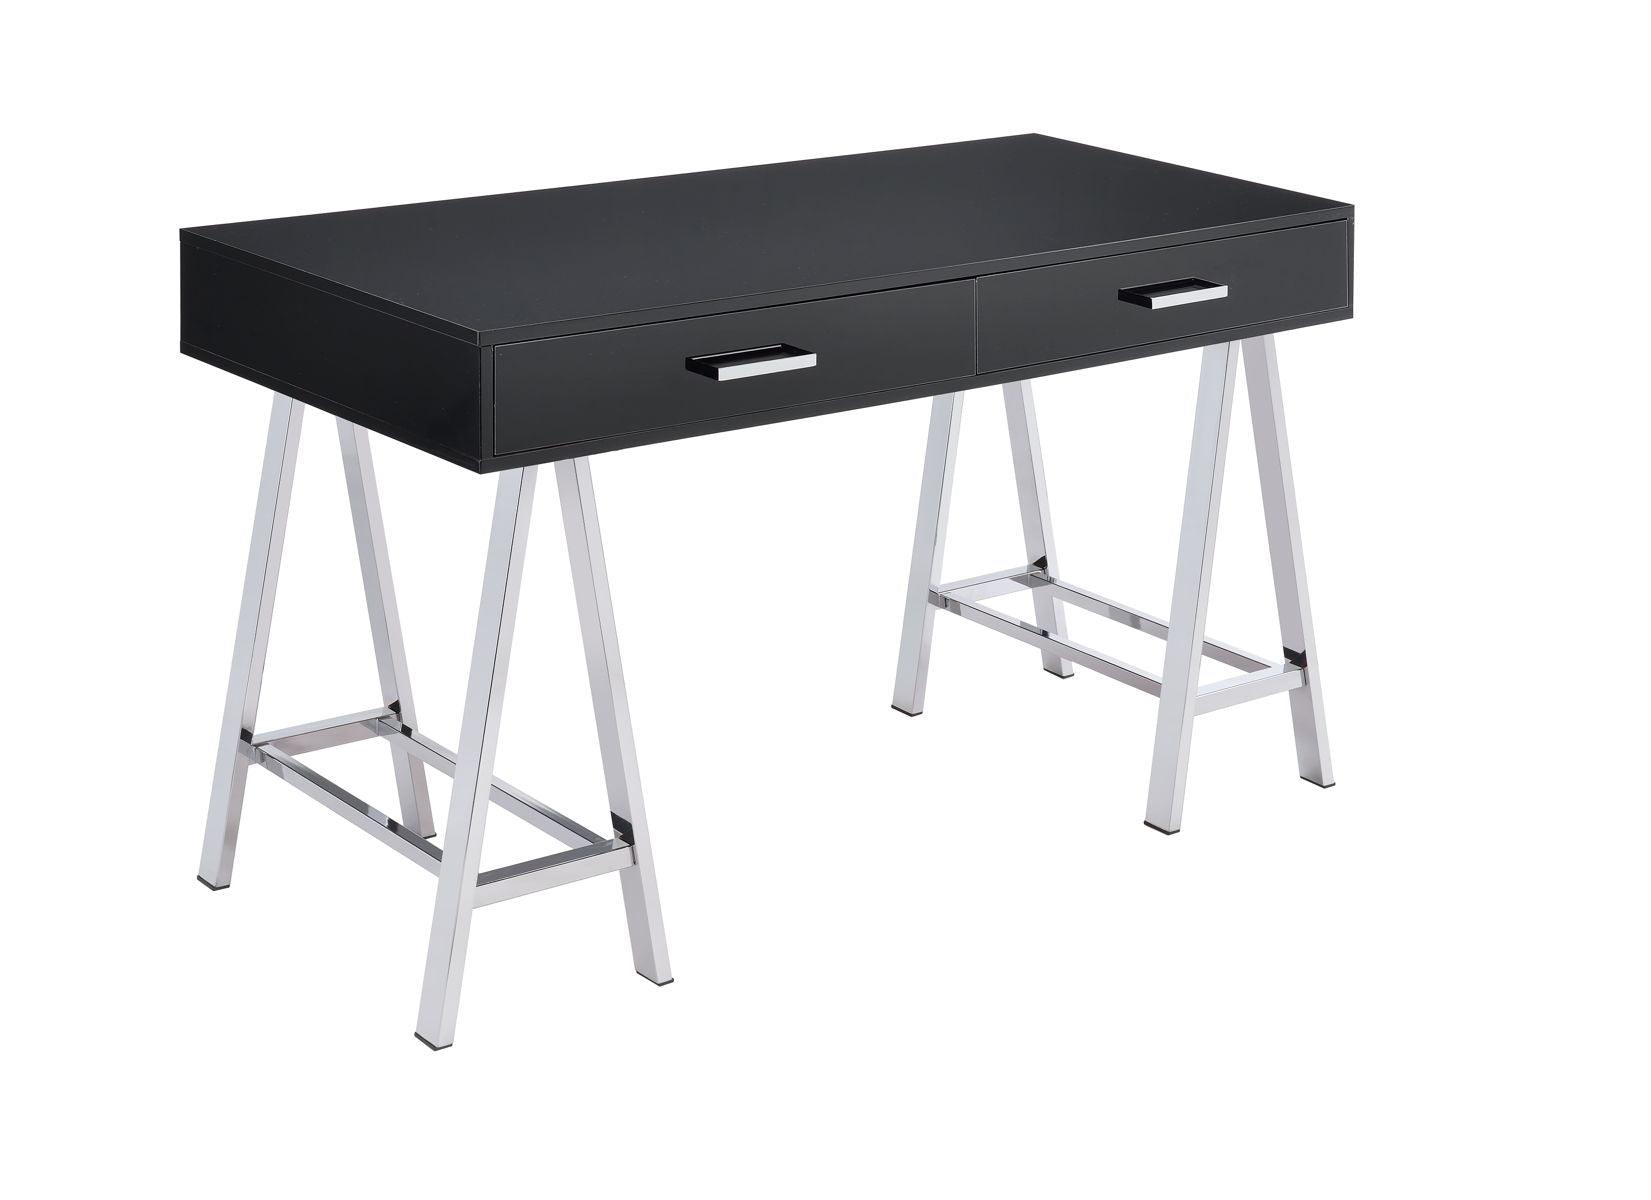 ACME - Coleen - Desk - Black High Gloss & Chrome - 5th Avenue Furniture